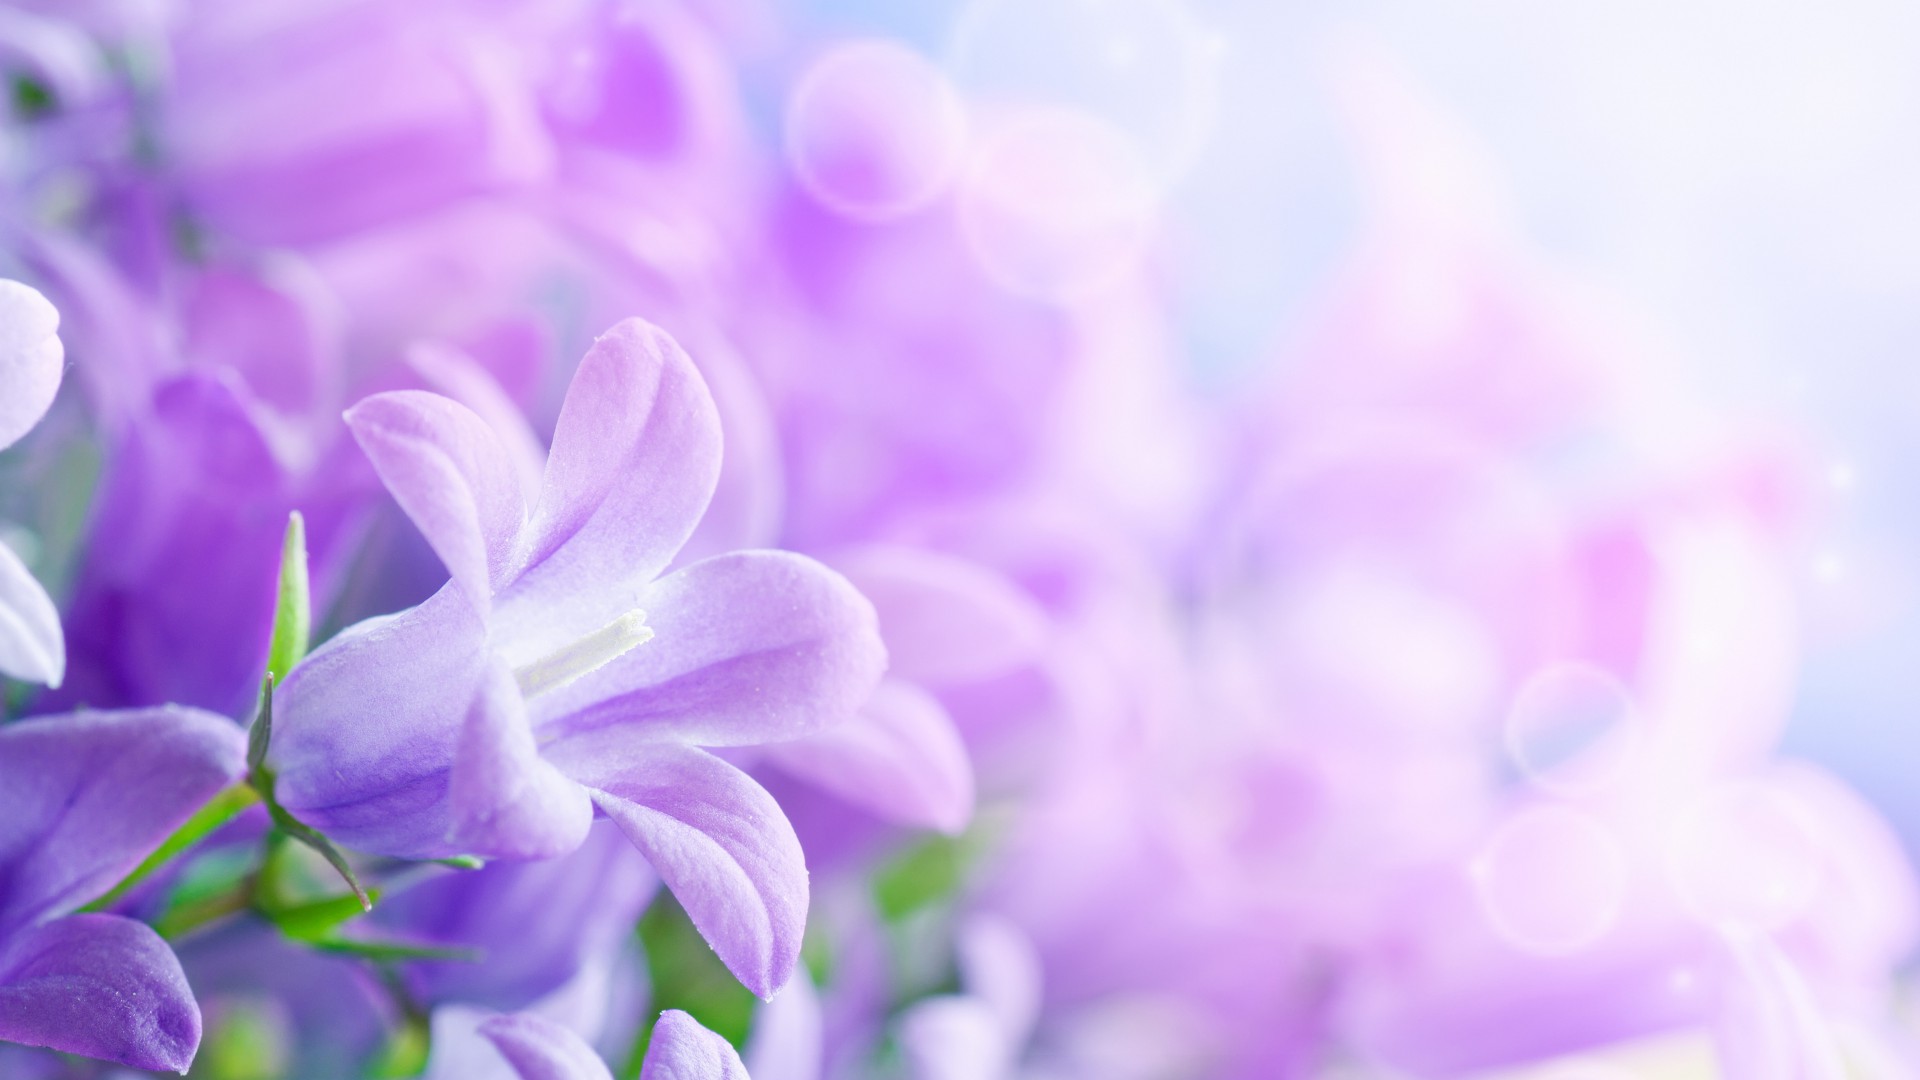 Утренняя глория, 5k, 4k, 8k, фиолетовый, цветы, лучи, Morning glory, 5k, 4k wallpaper, 8k, purple, flowers, rays (horizontal)